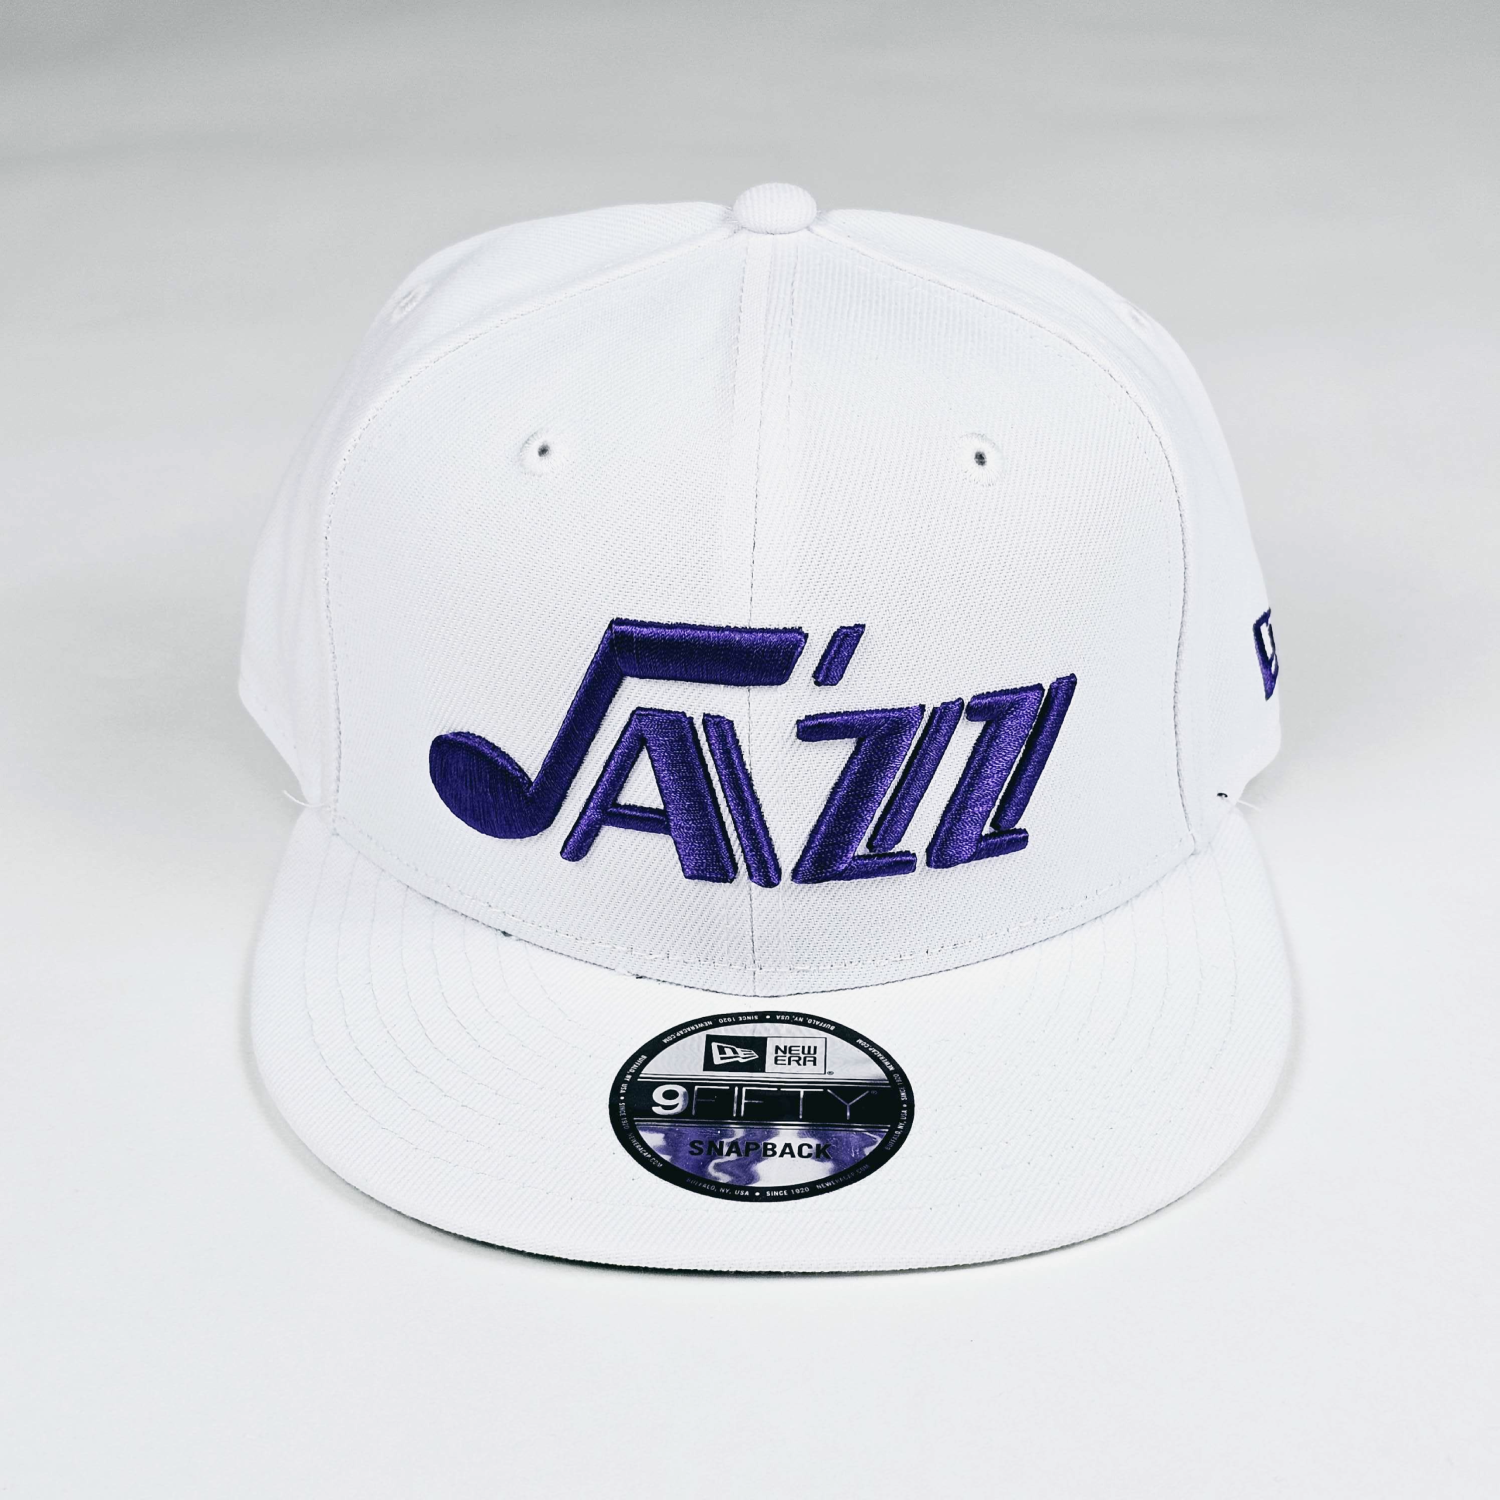 NY black purple fitted cap, retro vintage baseball hat size L